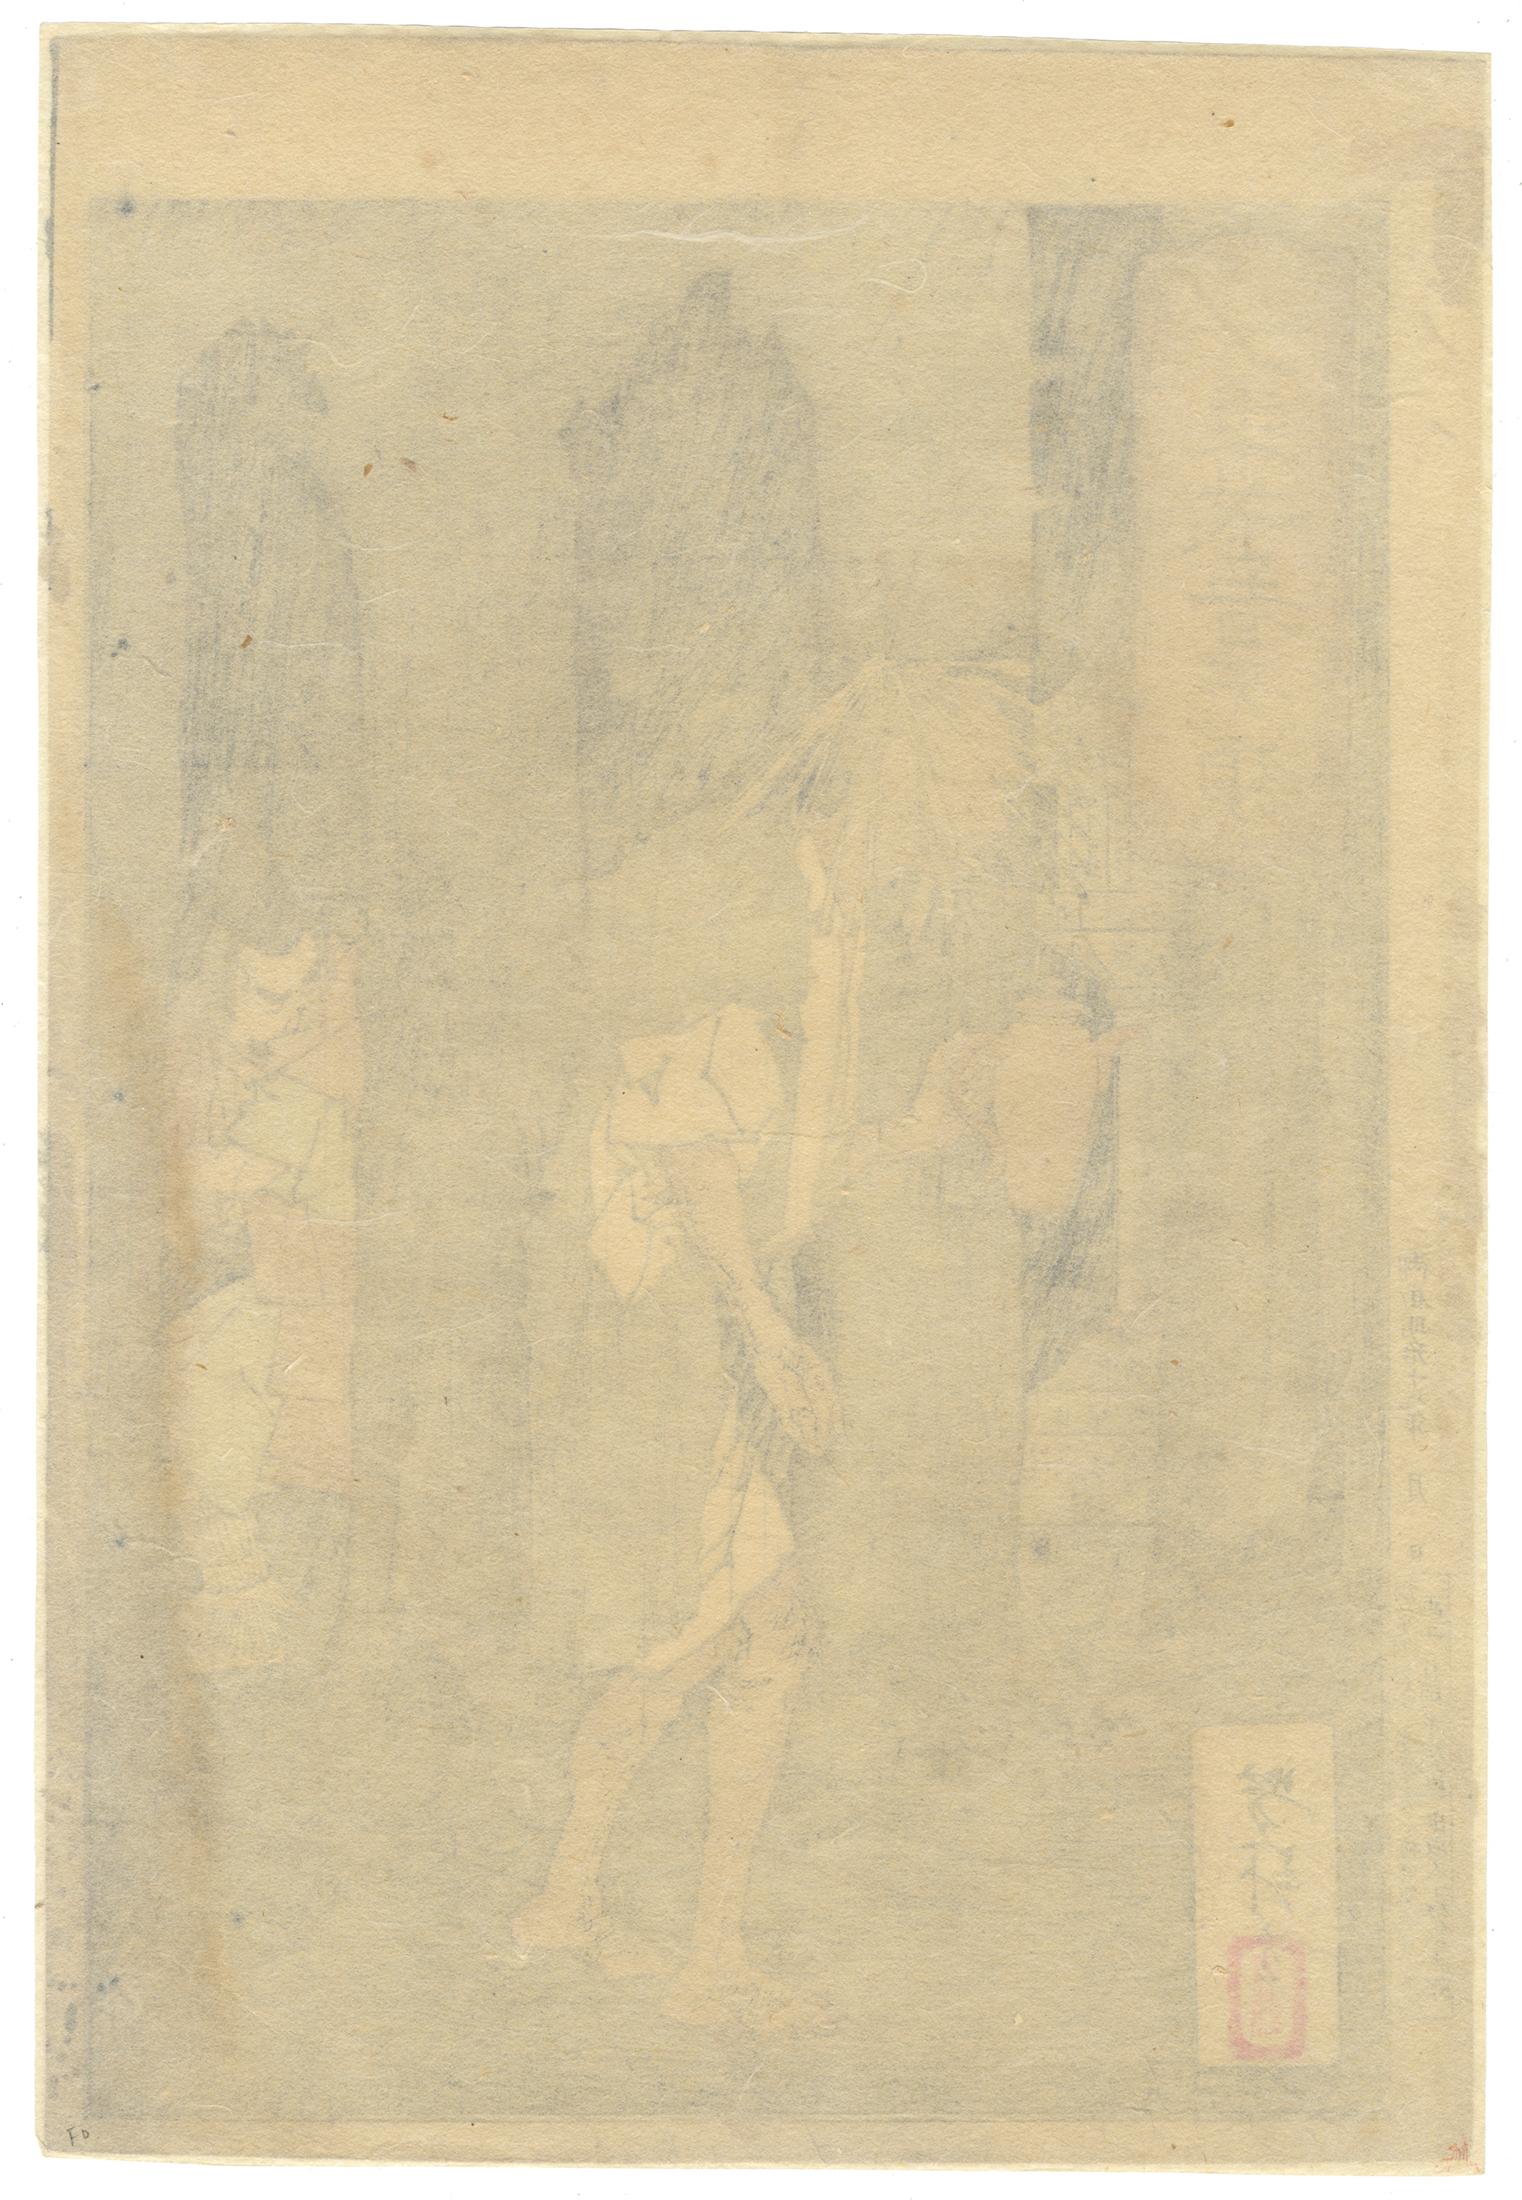 Artist: Yoshitoshi Tsukioka (1839-1892)
Title: Taira no Tadamori and the Oil Priest
Series: Yoshitoshi's Courageous Warriors
Publisher: Kobayashi Tetsujiro
Date: 1885
Dimensions: 24.5 x 36.0 cm (25.0 x 36.7 cm with backing)
Condition: Backed. Faint